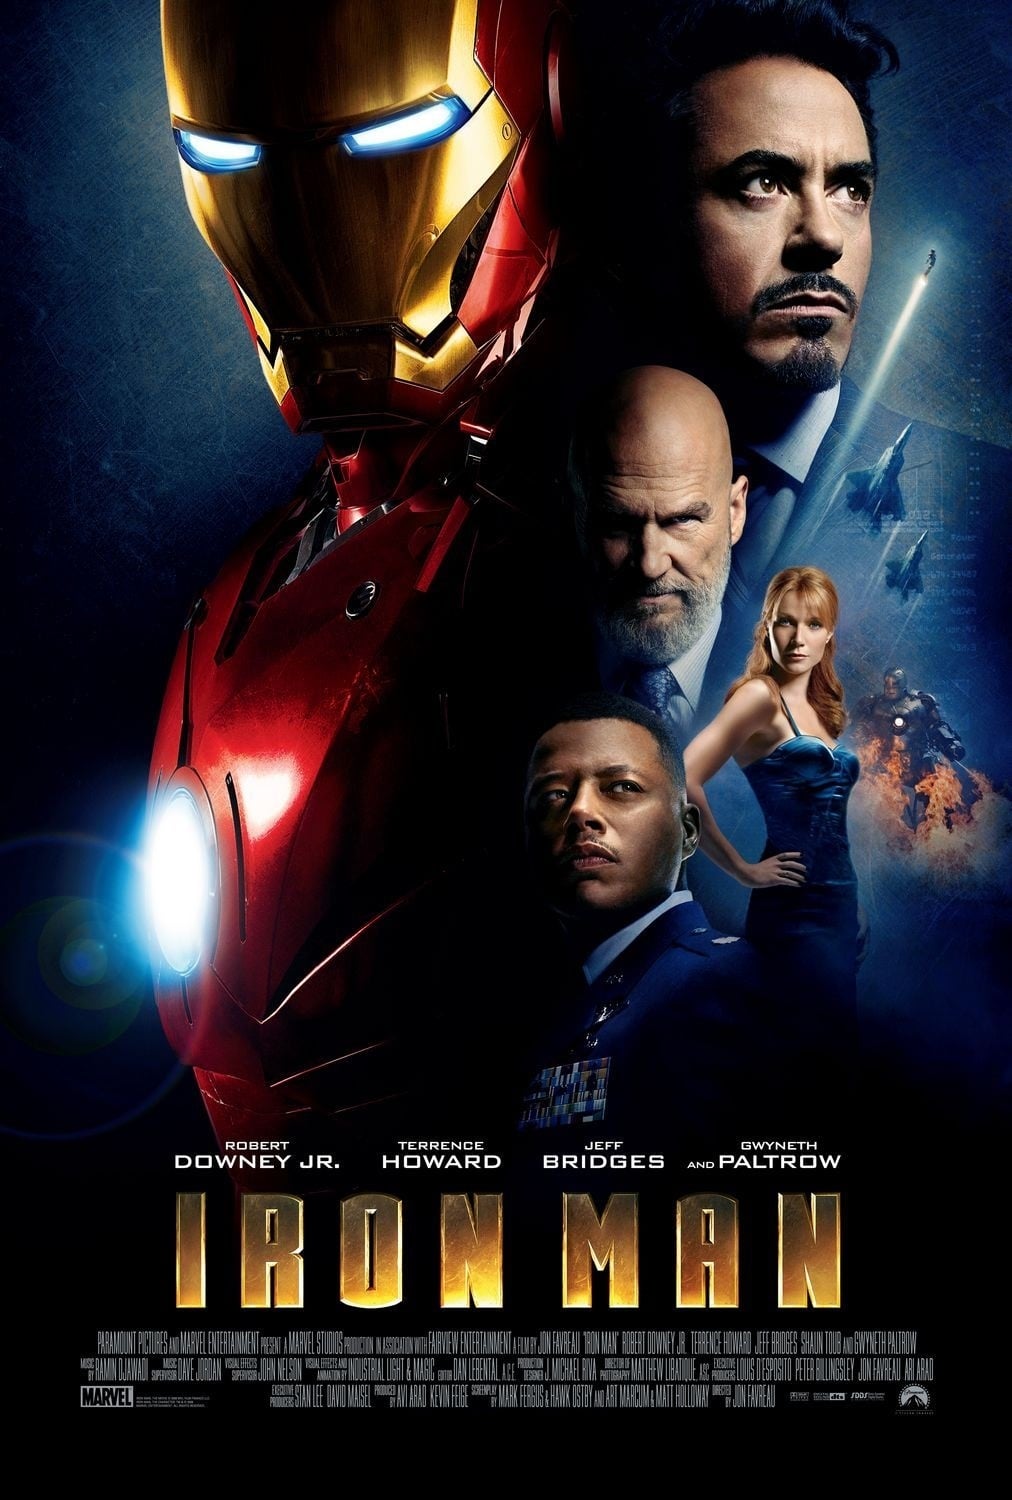 Iron Man   Film Review   Caillou Pettis Movie Reviews